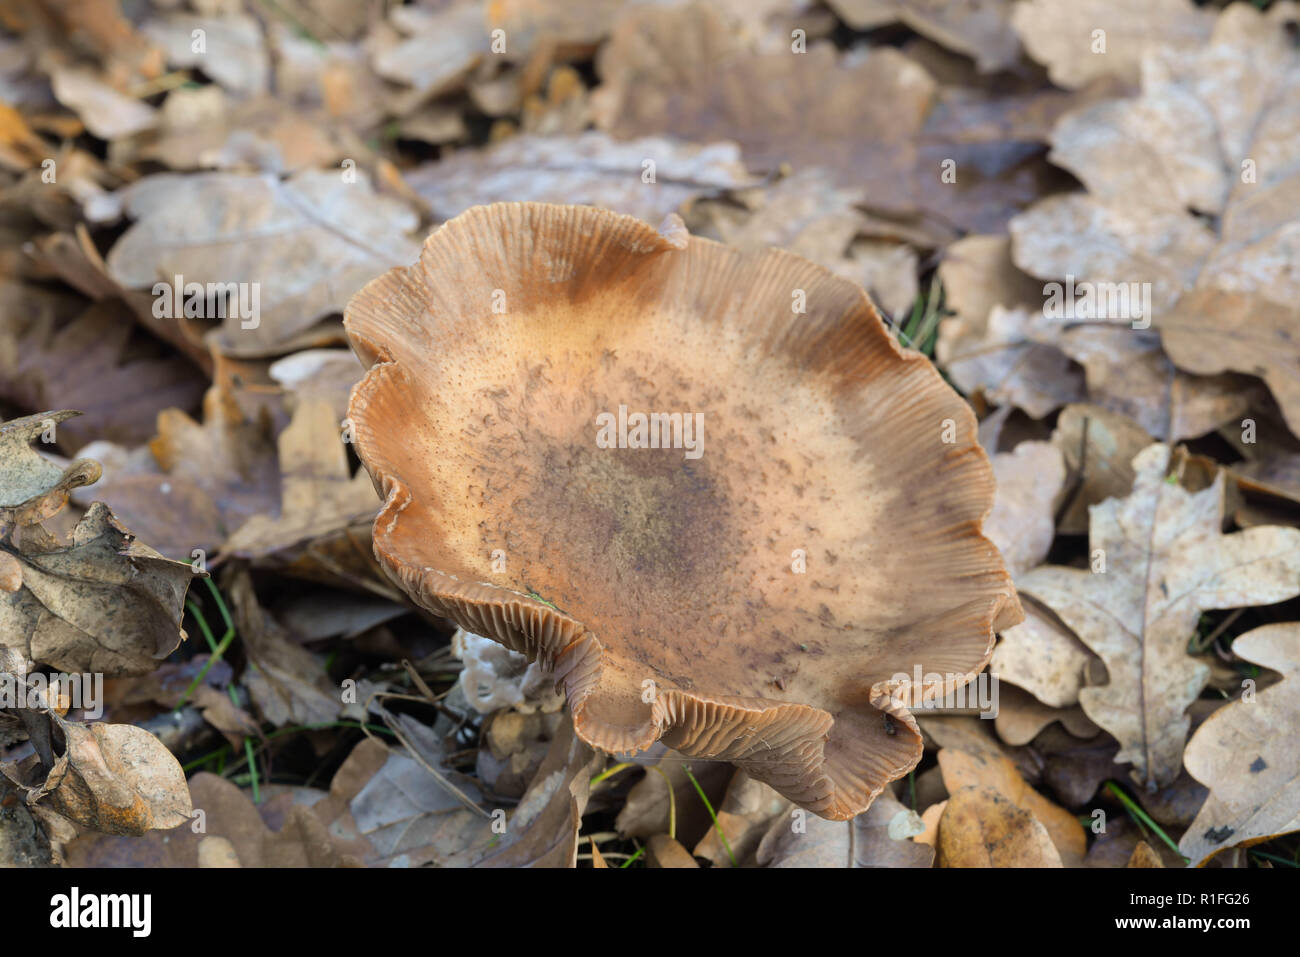 Armillaria ostoyae mushroom in oak leaves Stock Photo